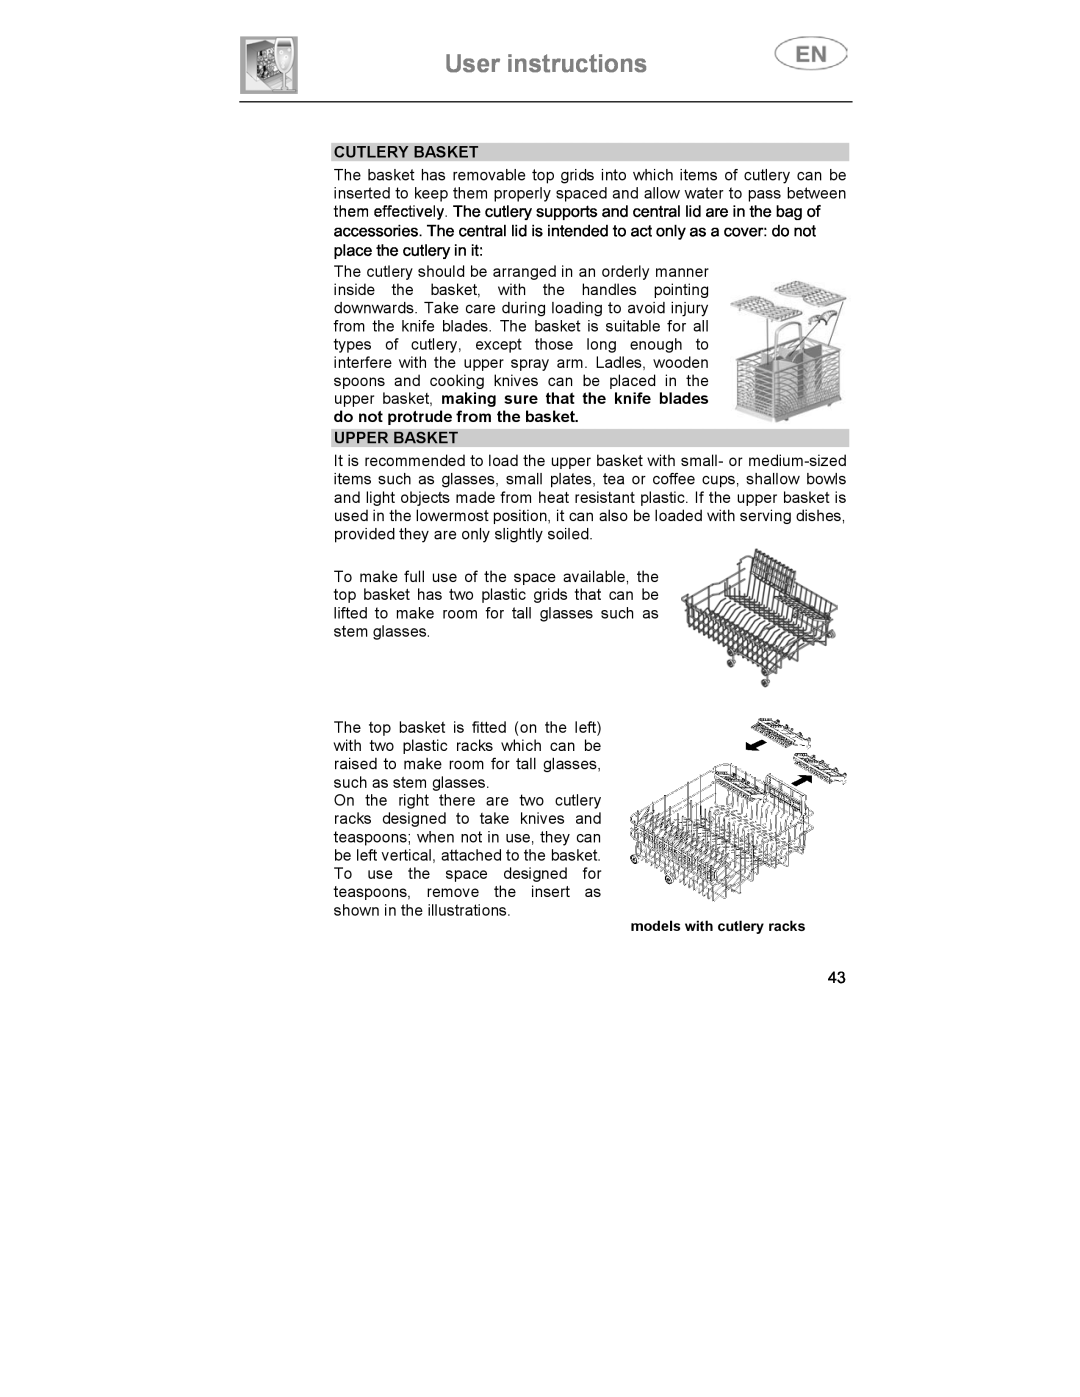 Smeg CA01-3 instruction manual User instructions, Cutlery Basket, Upper Basket, models with cutlery racks 